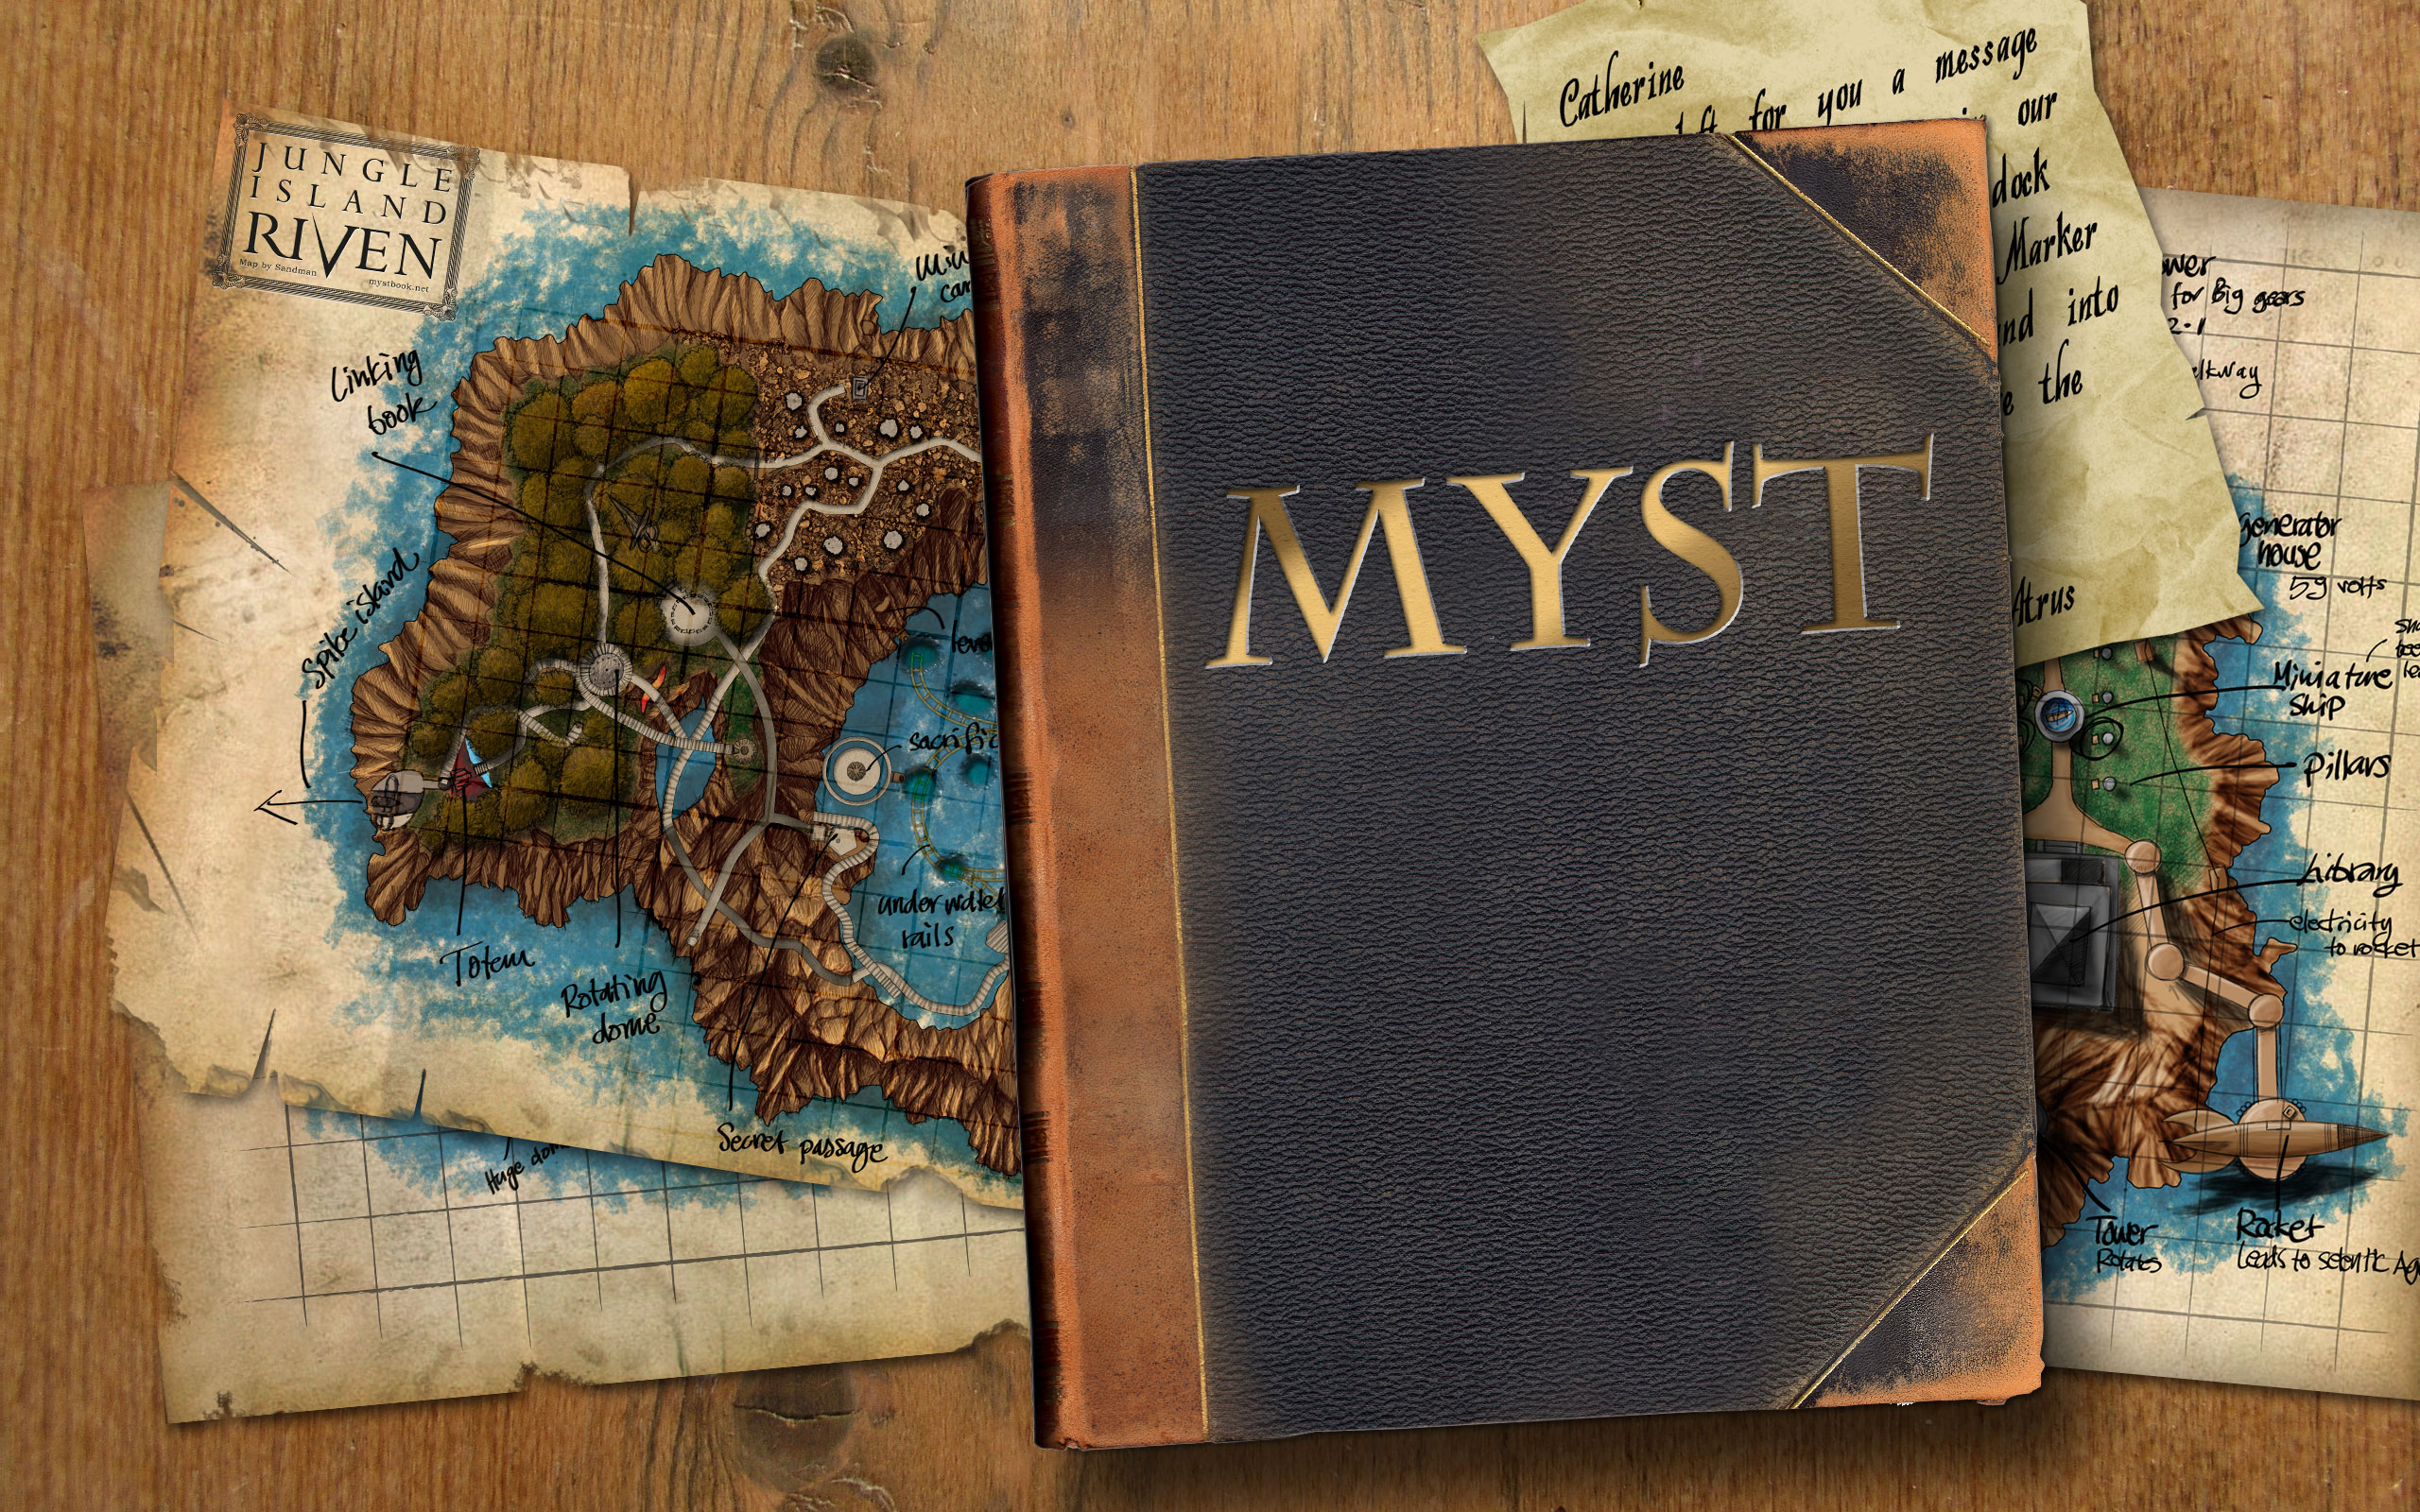 myst game - Massa Catherine 4 Ungte Sland mark Riven Marker to Abs Wag Myst 59 Meieties Pilkas Ship nou Gle Dnb